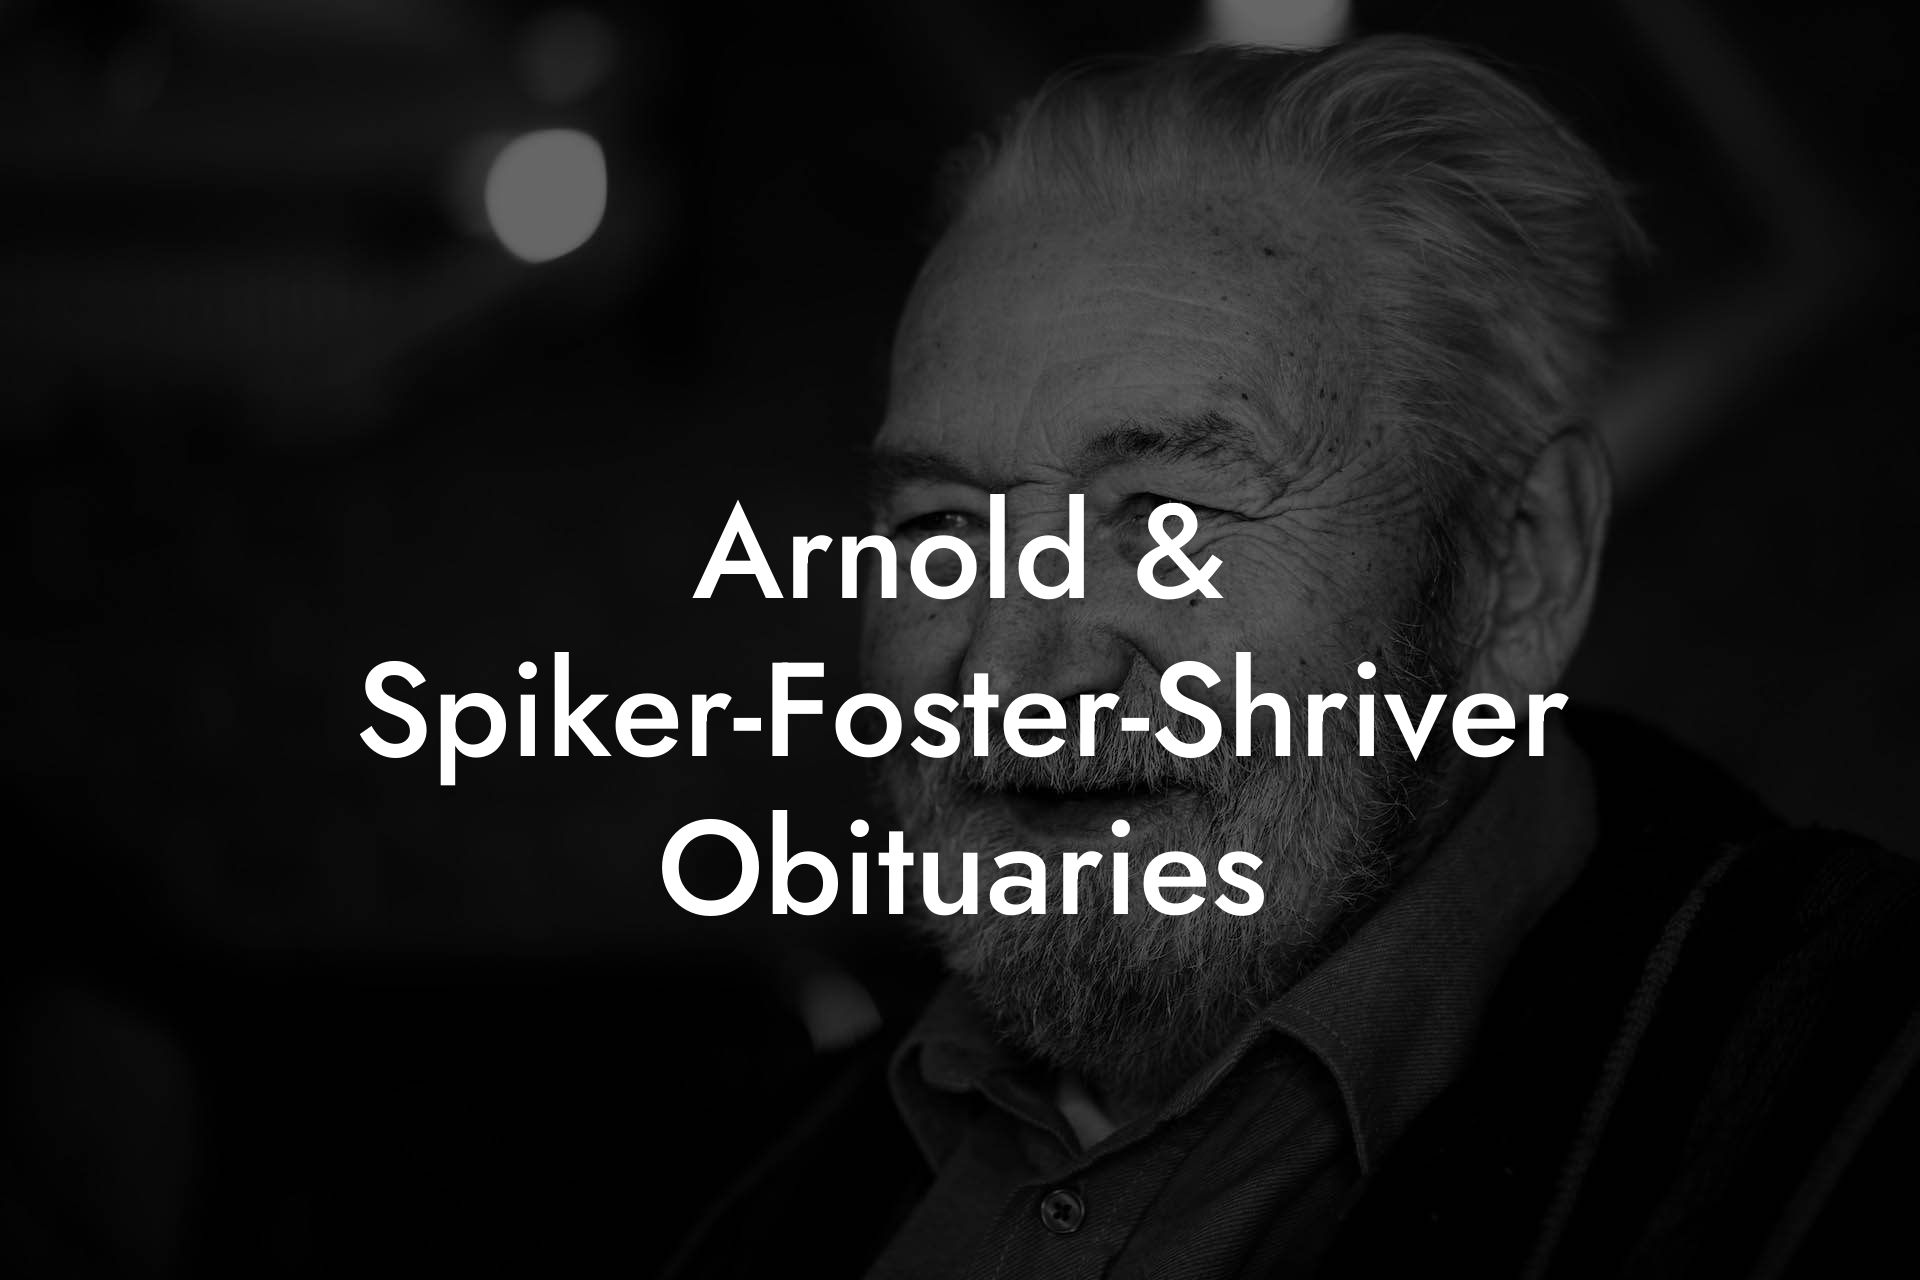 Arnold & Spiker-Foster-Shriver Obituaries